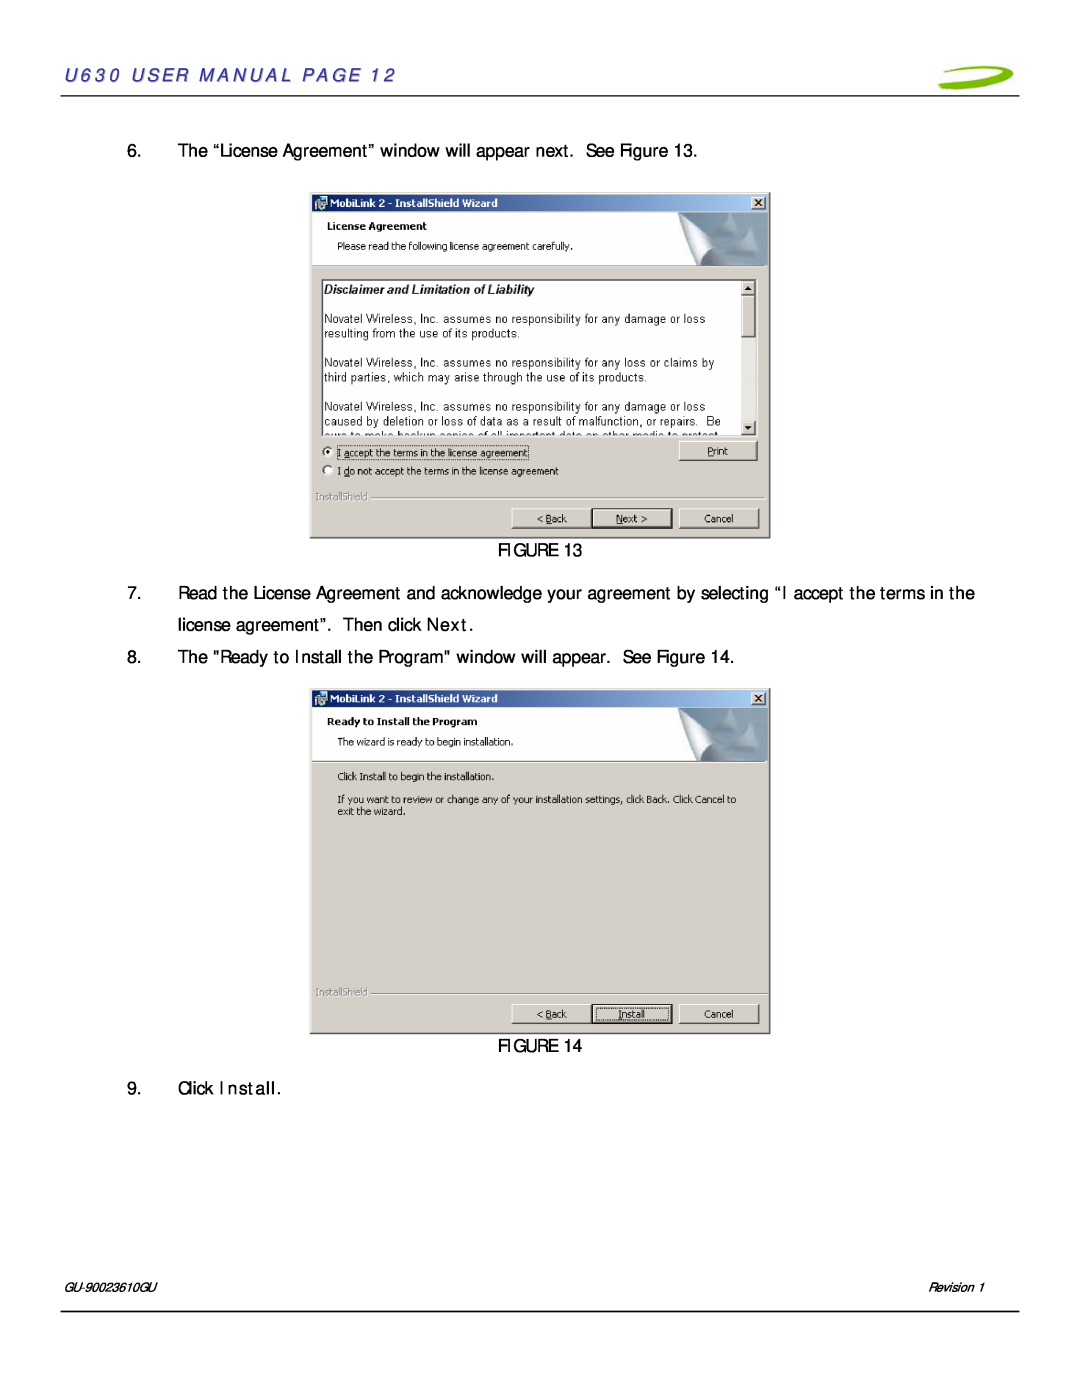 InFocus user manual U630 USER MANUAL PAGE, Click Install, GU-90023610GU, Revision 